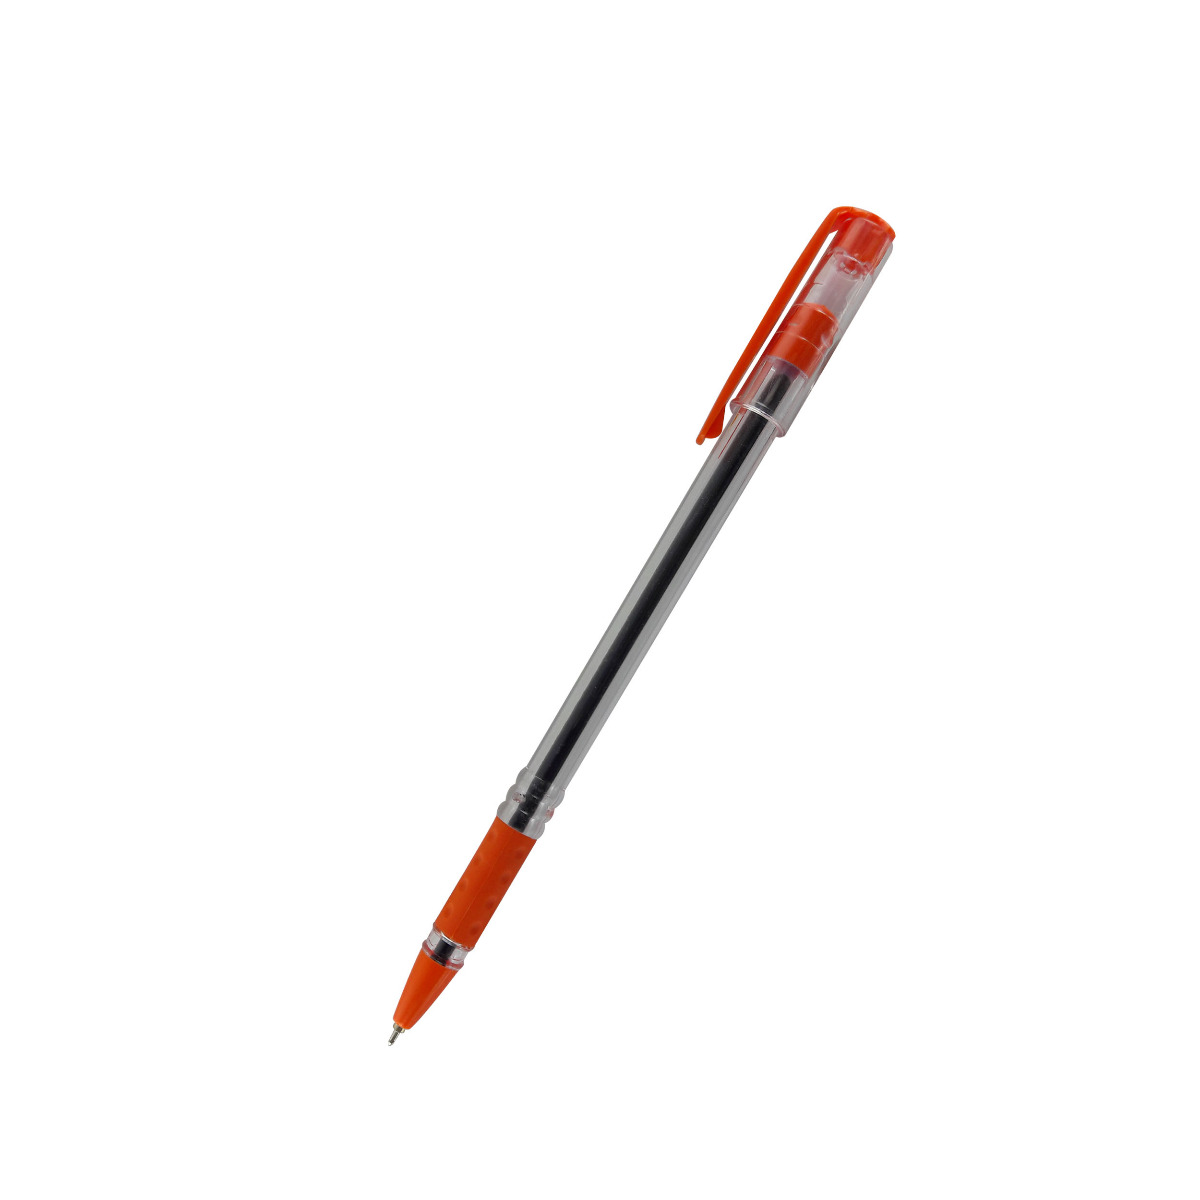 Cello Model No: 11977 Finegrip Infinity Model Orange Color Clip Blue Ink Ball pen